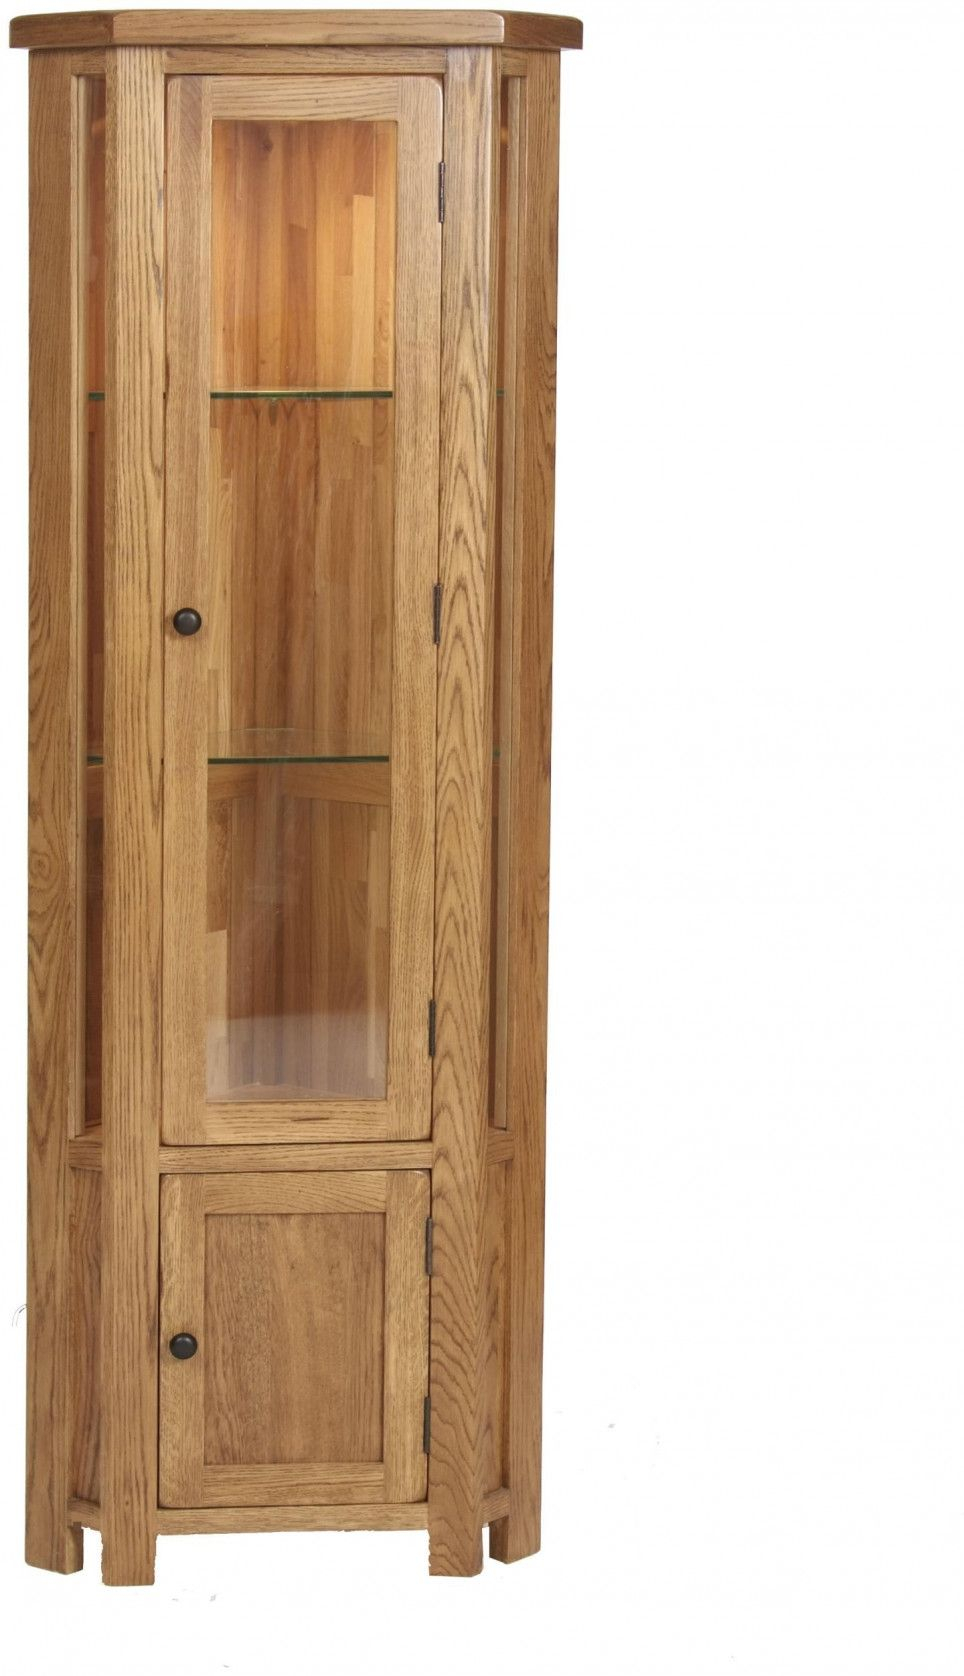 20 Oak Corner Display Cabinets With Glass Doors Small Kitchen inside measurements 964 X 1676